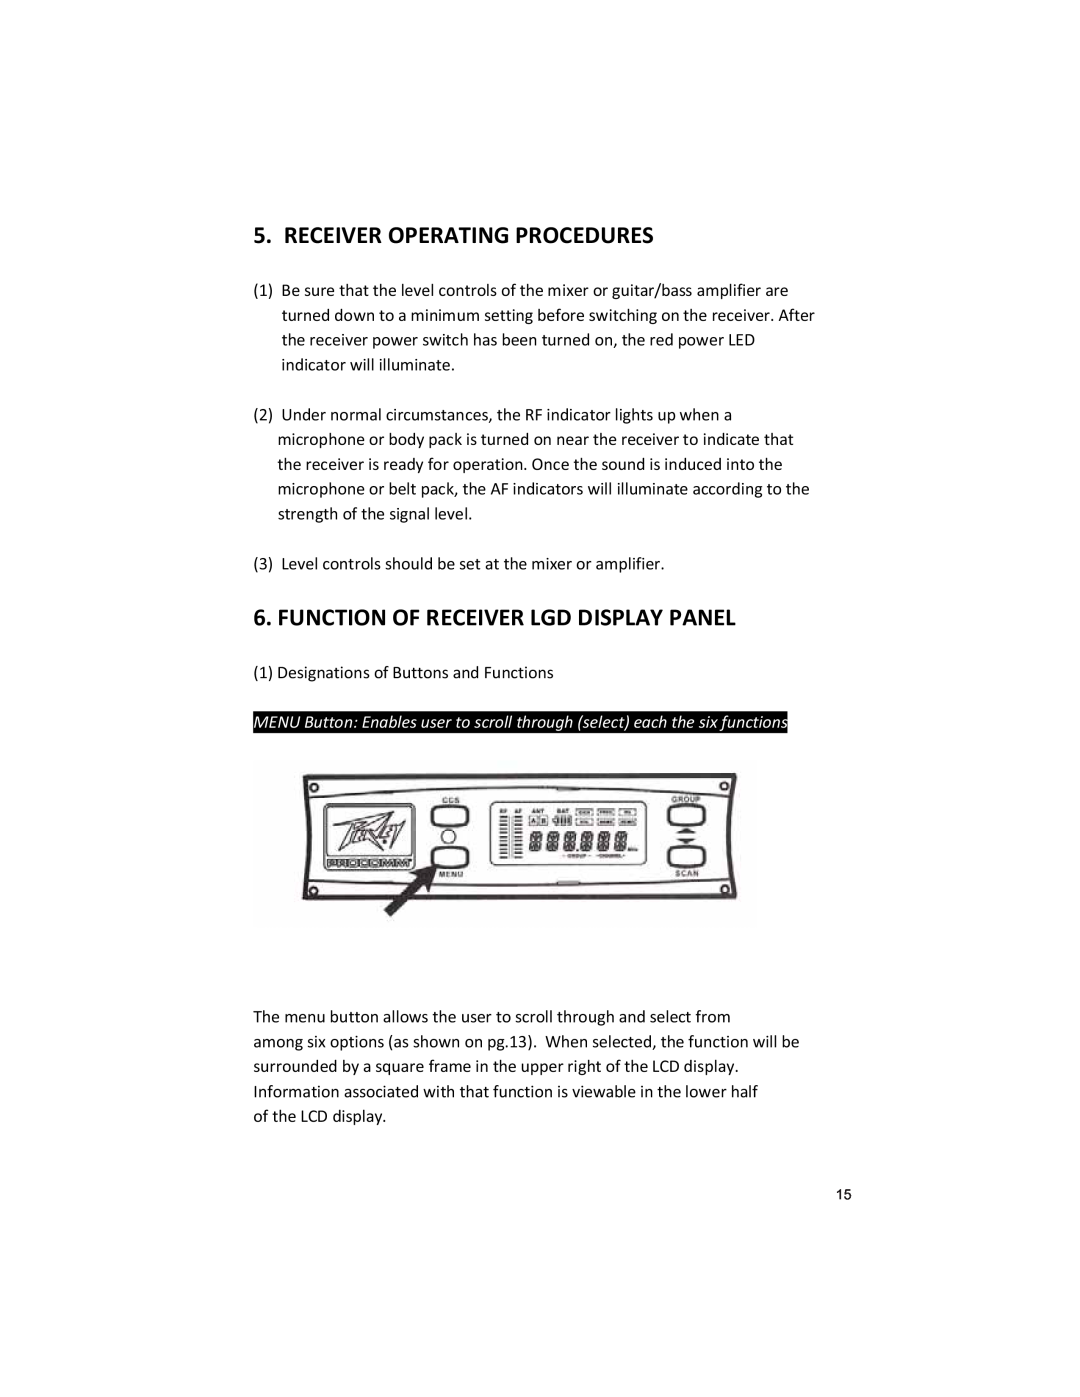 Peavey U1002 manual Receiver Operating Procedures, Function Of Receiver Lgd Display Panel 